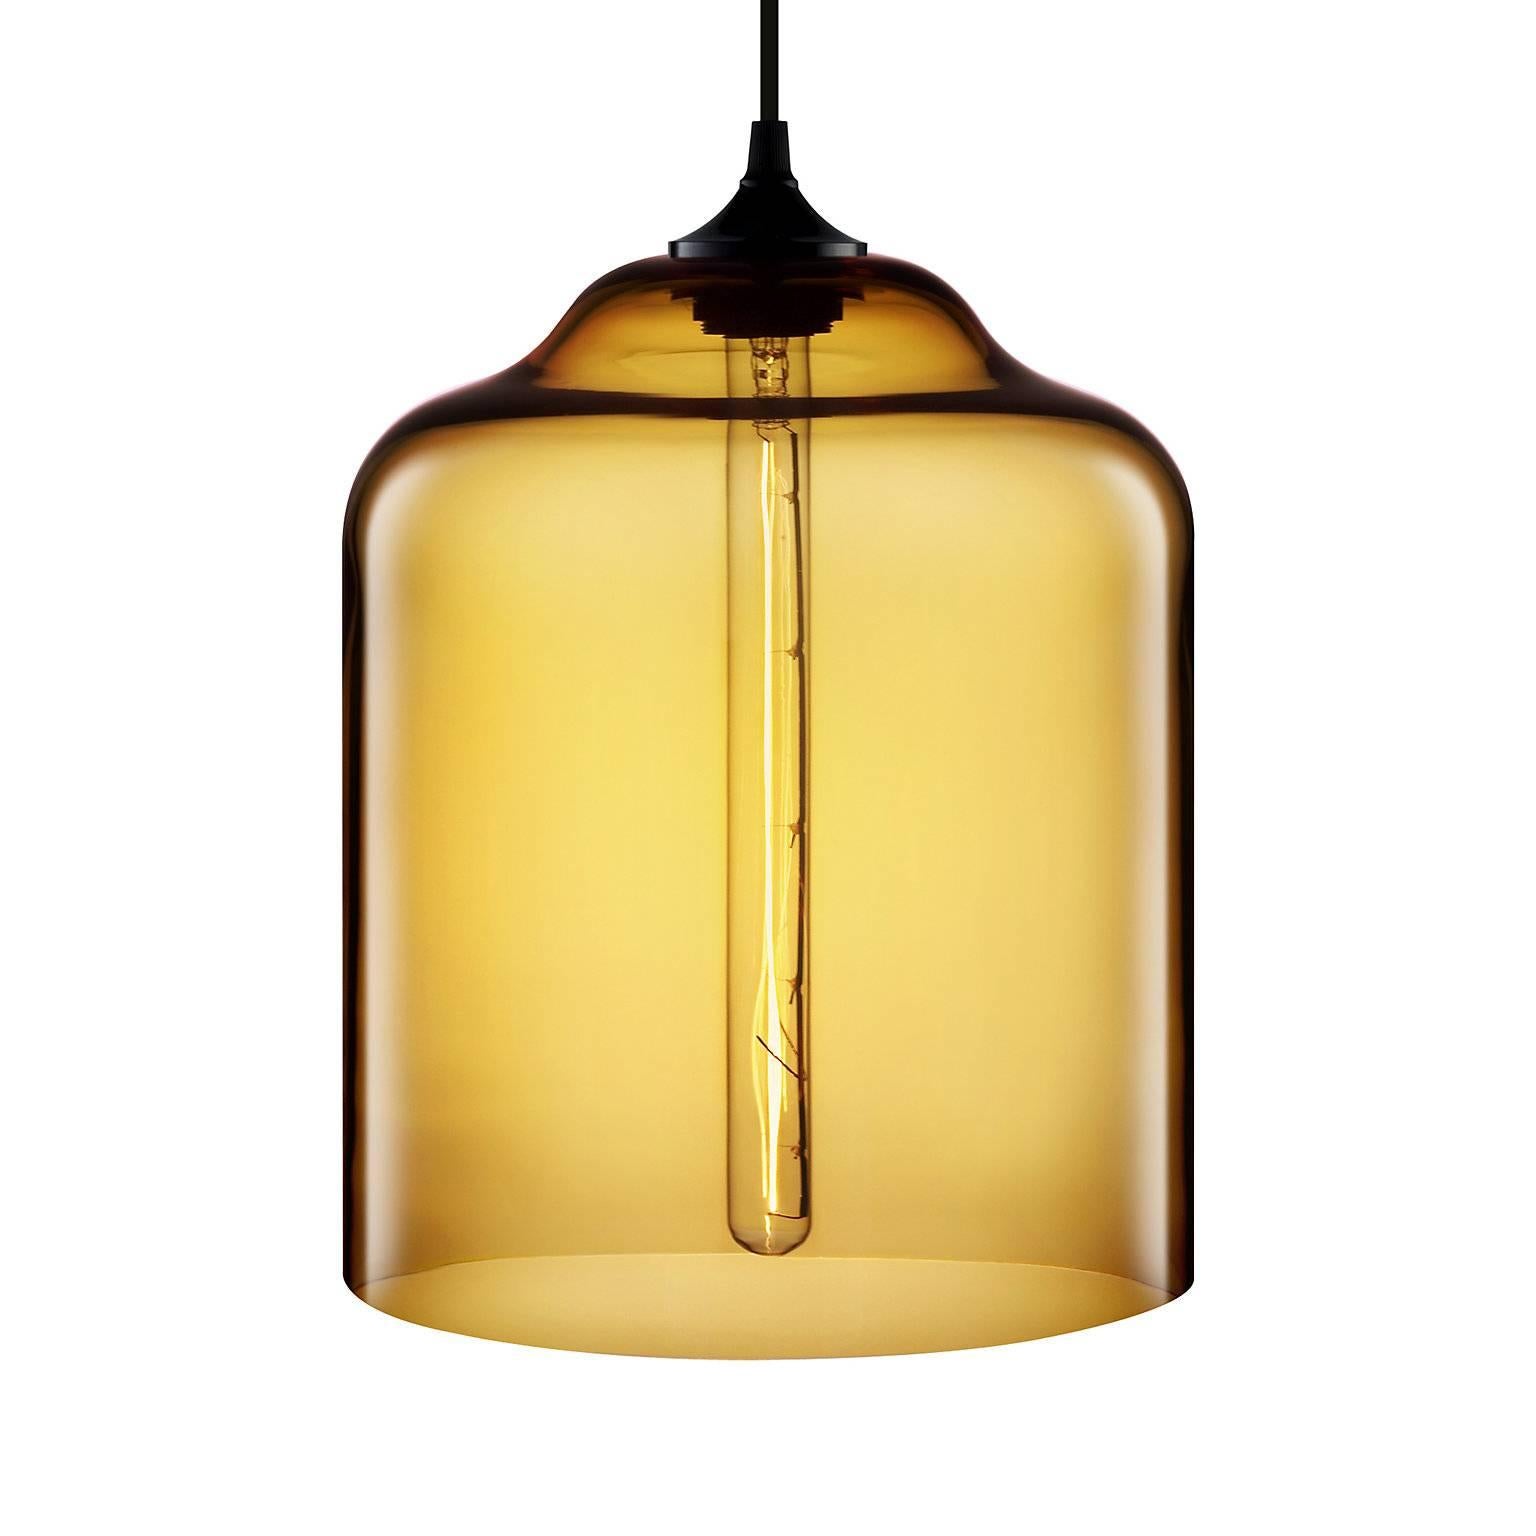 American Bell Jar Smoke Handblown Modern Glass Pendant Light, Made in the USA For Sale